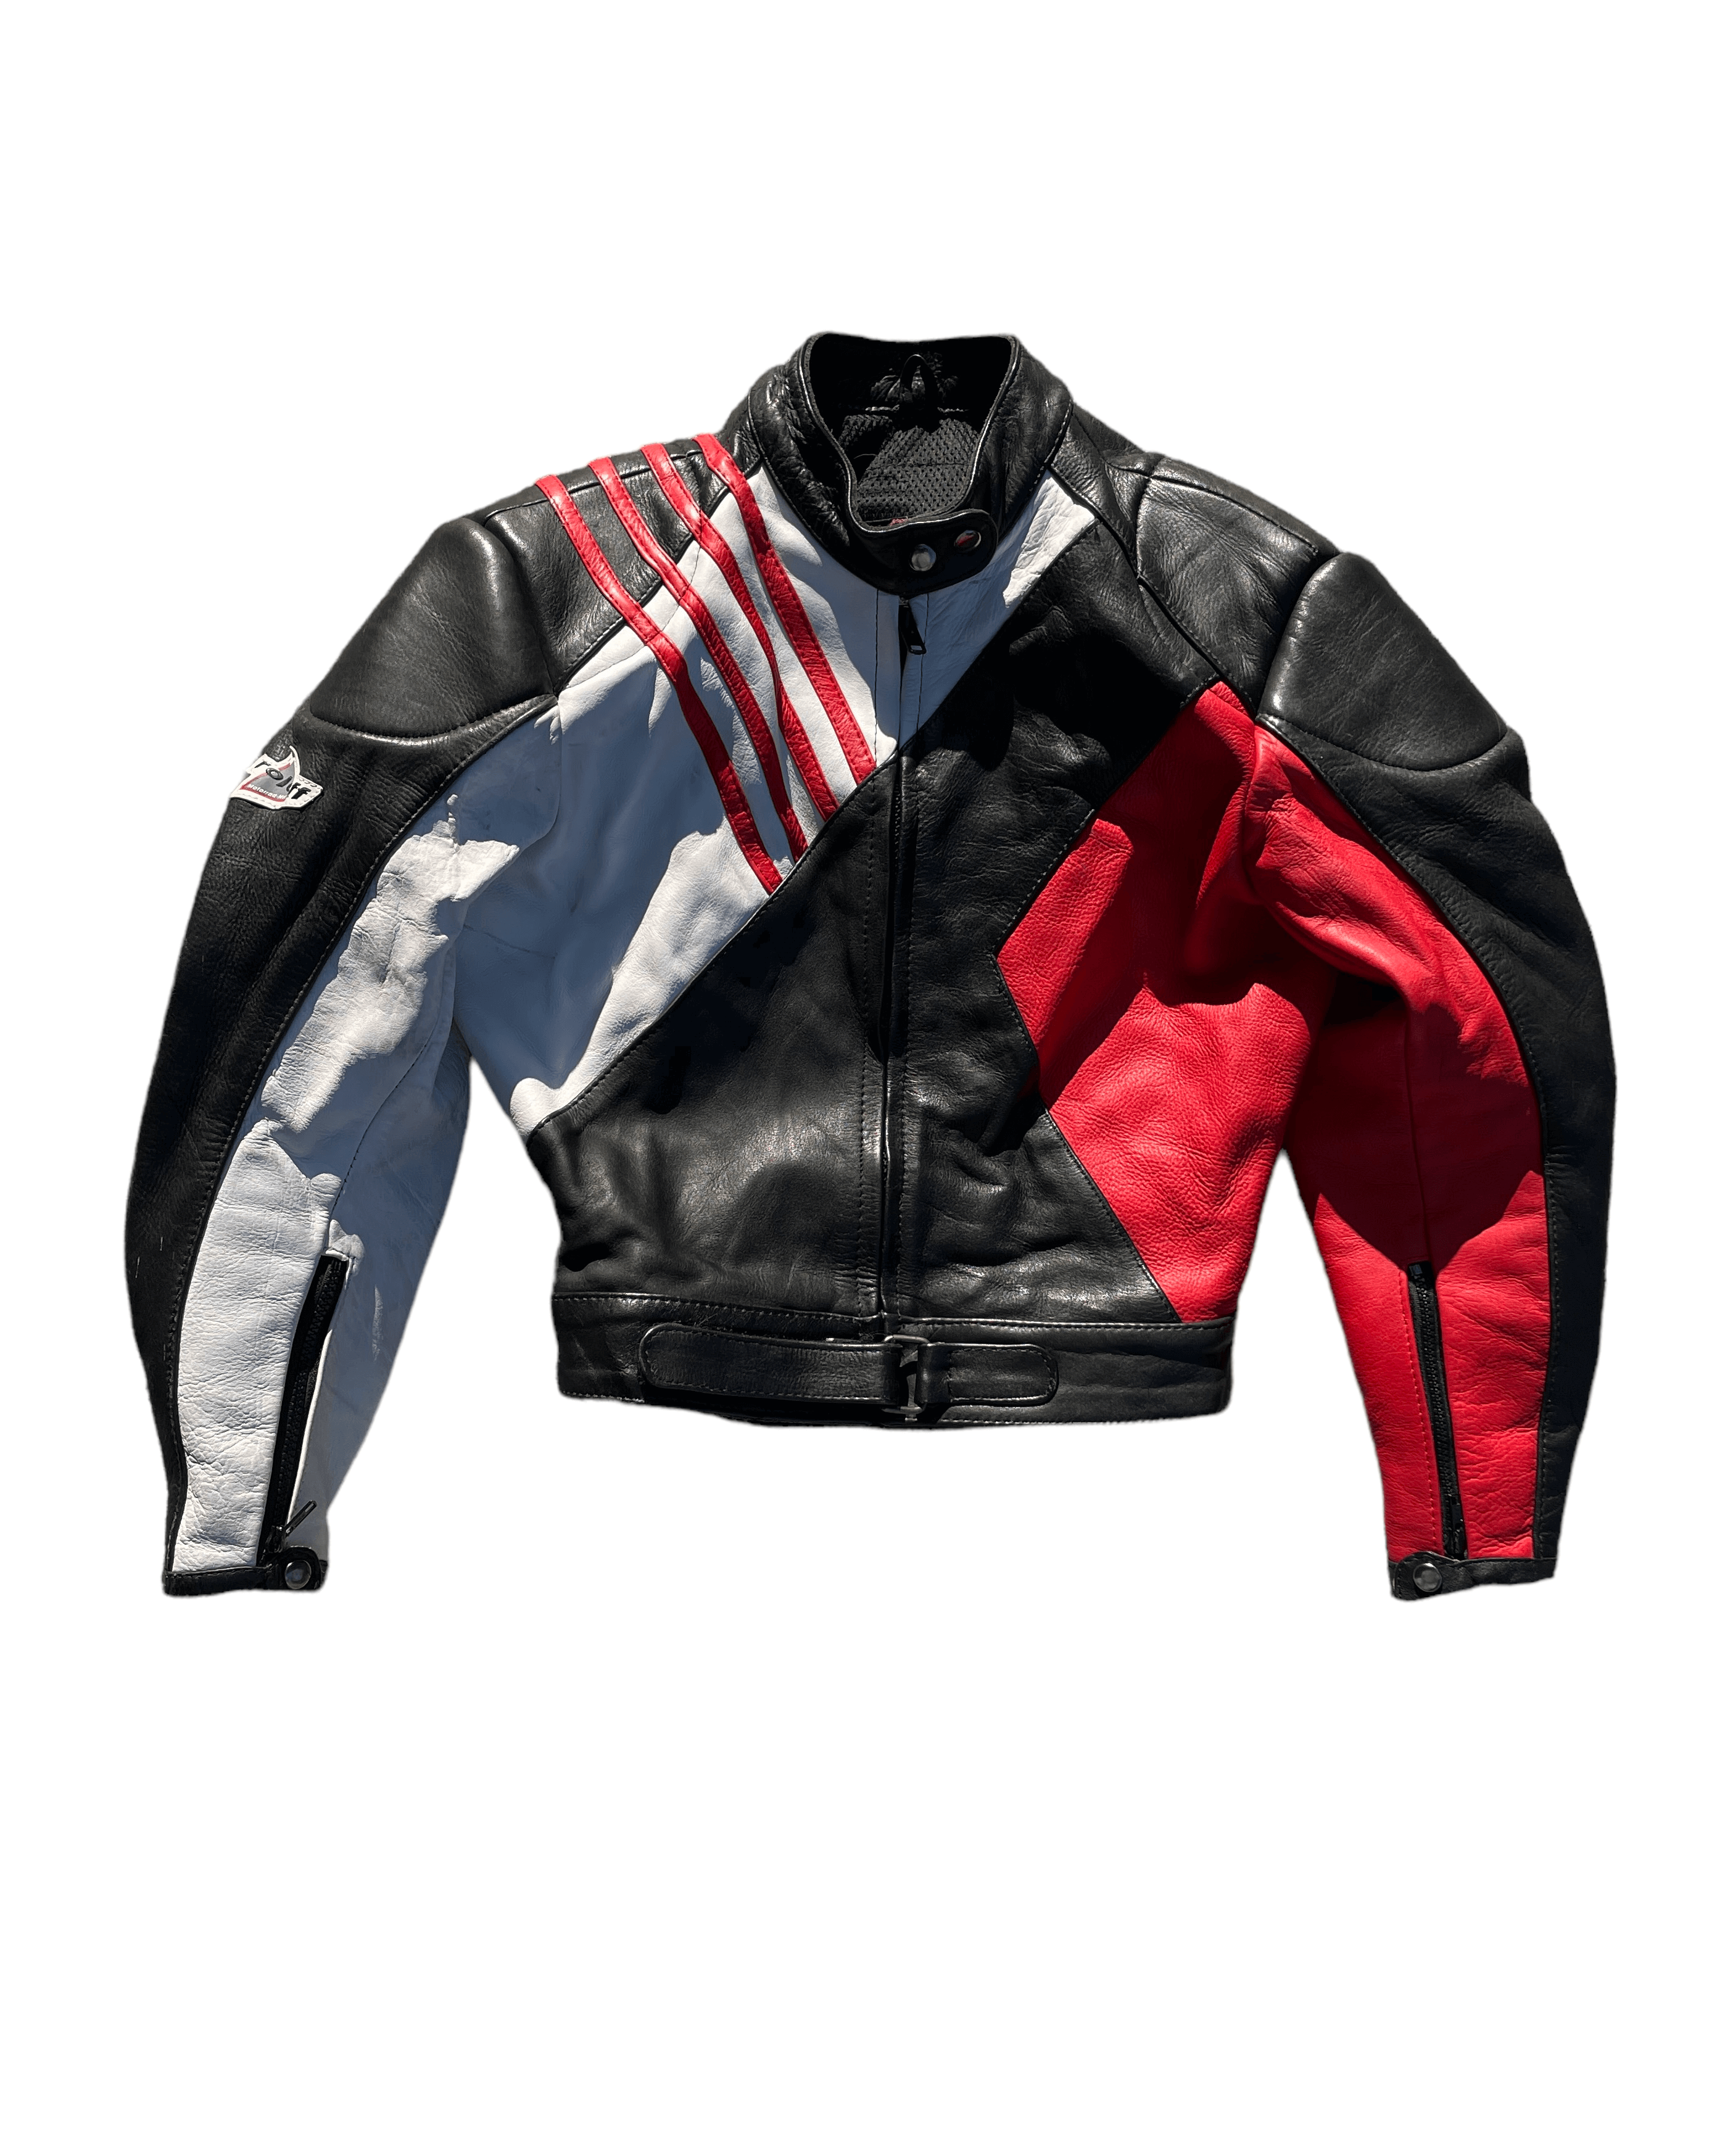 Vintage Motorcycle Racing Leather Jacket